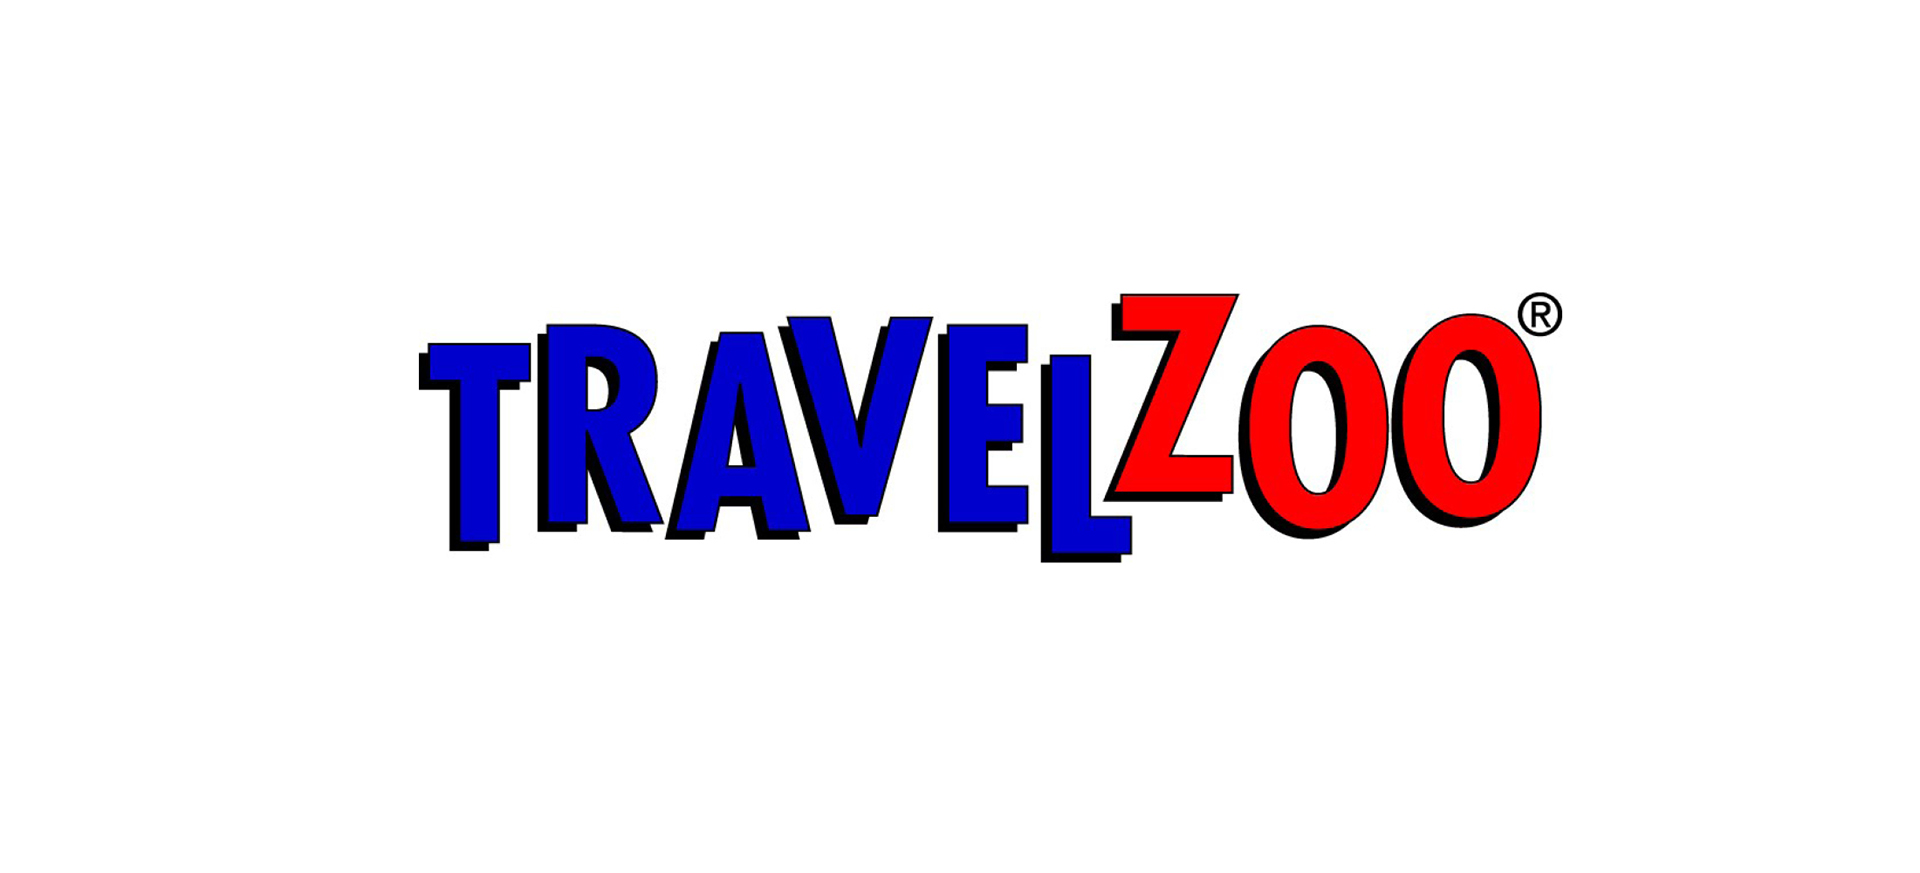 Travelzoo_container_4